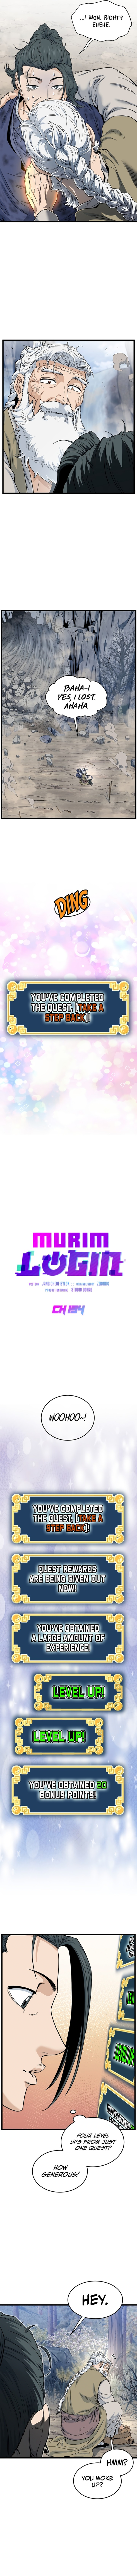 Murim Login - Chapter 134 Page 4